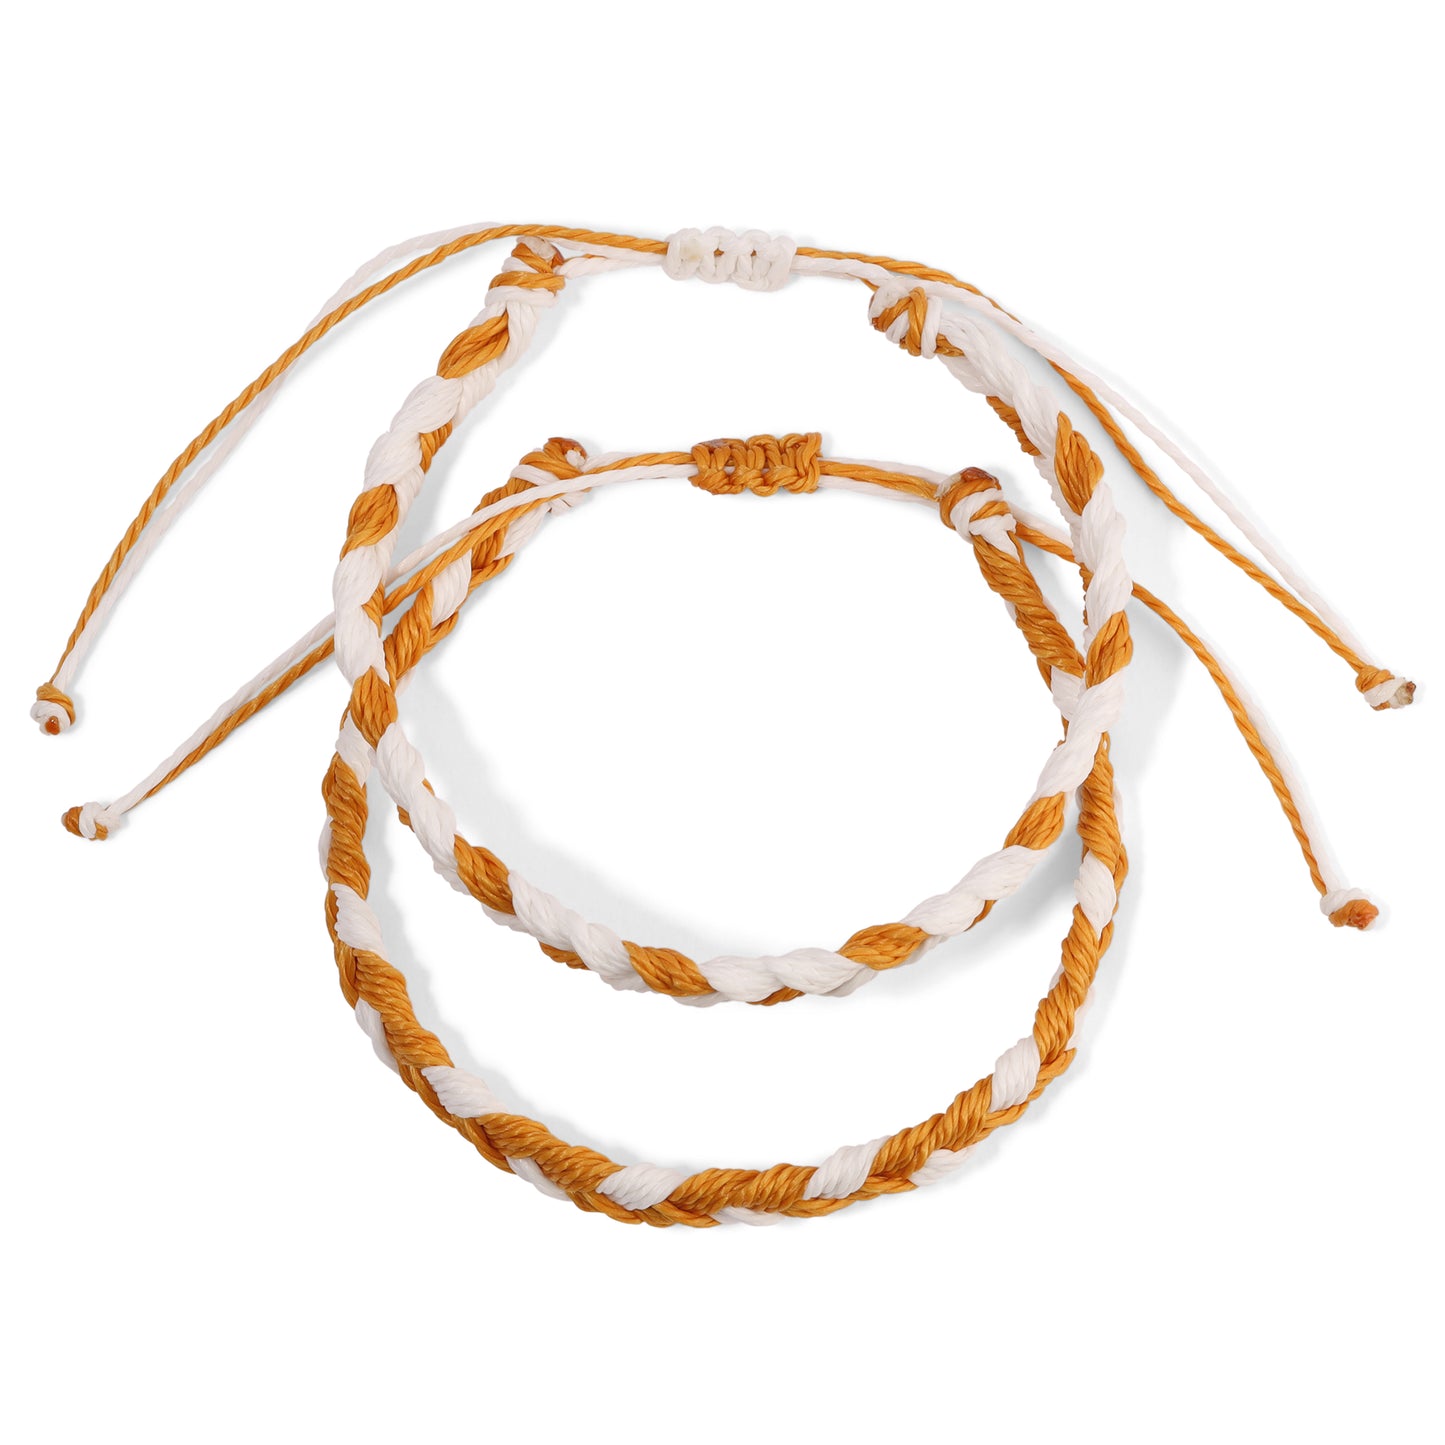 Burnt Orange and White Team Color Braided Bracelets - Set of 2